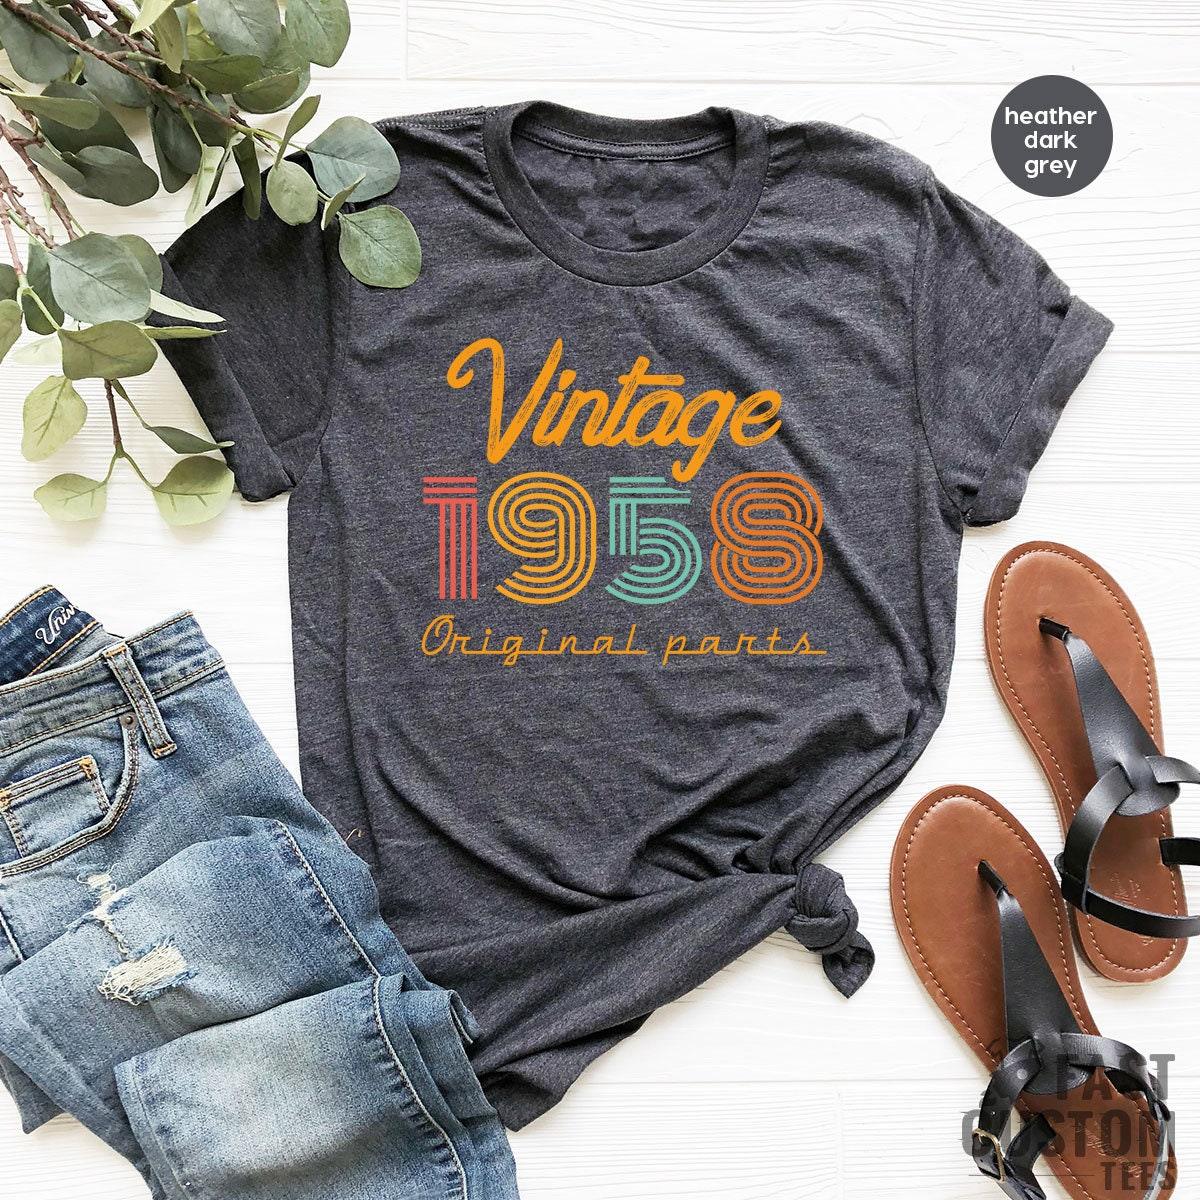 63rd Birthday Shirt, Vintage T Shirt, Vintage 1958 Shirt, 63rd Birthday Gift For Women, 63rd Birthday Shirt Men, Retro Shirt, Vintage Shirts - Fastdeliverytees.com